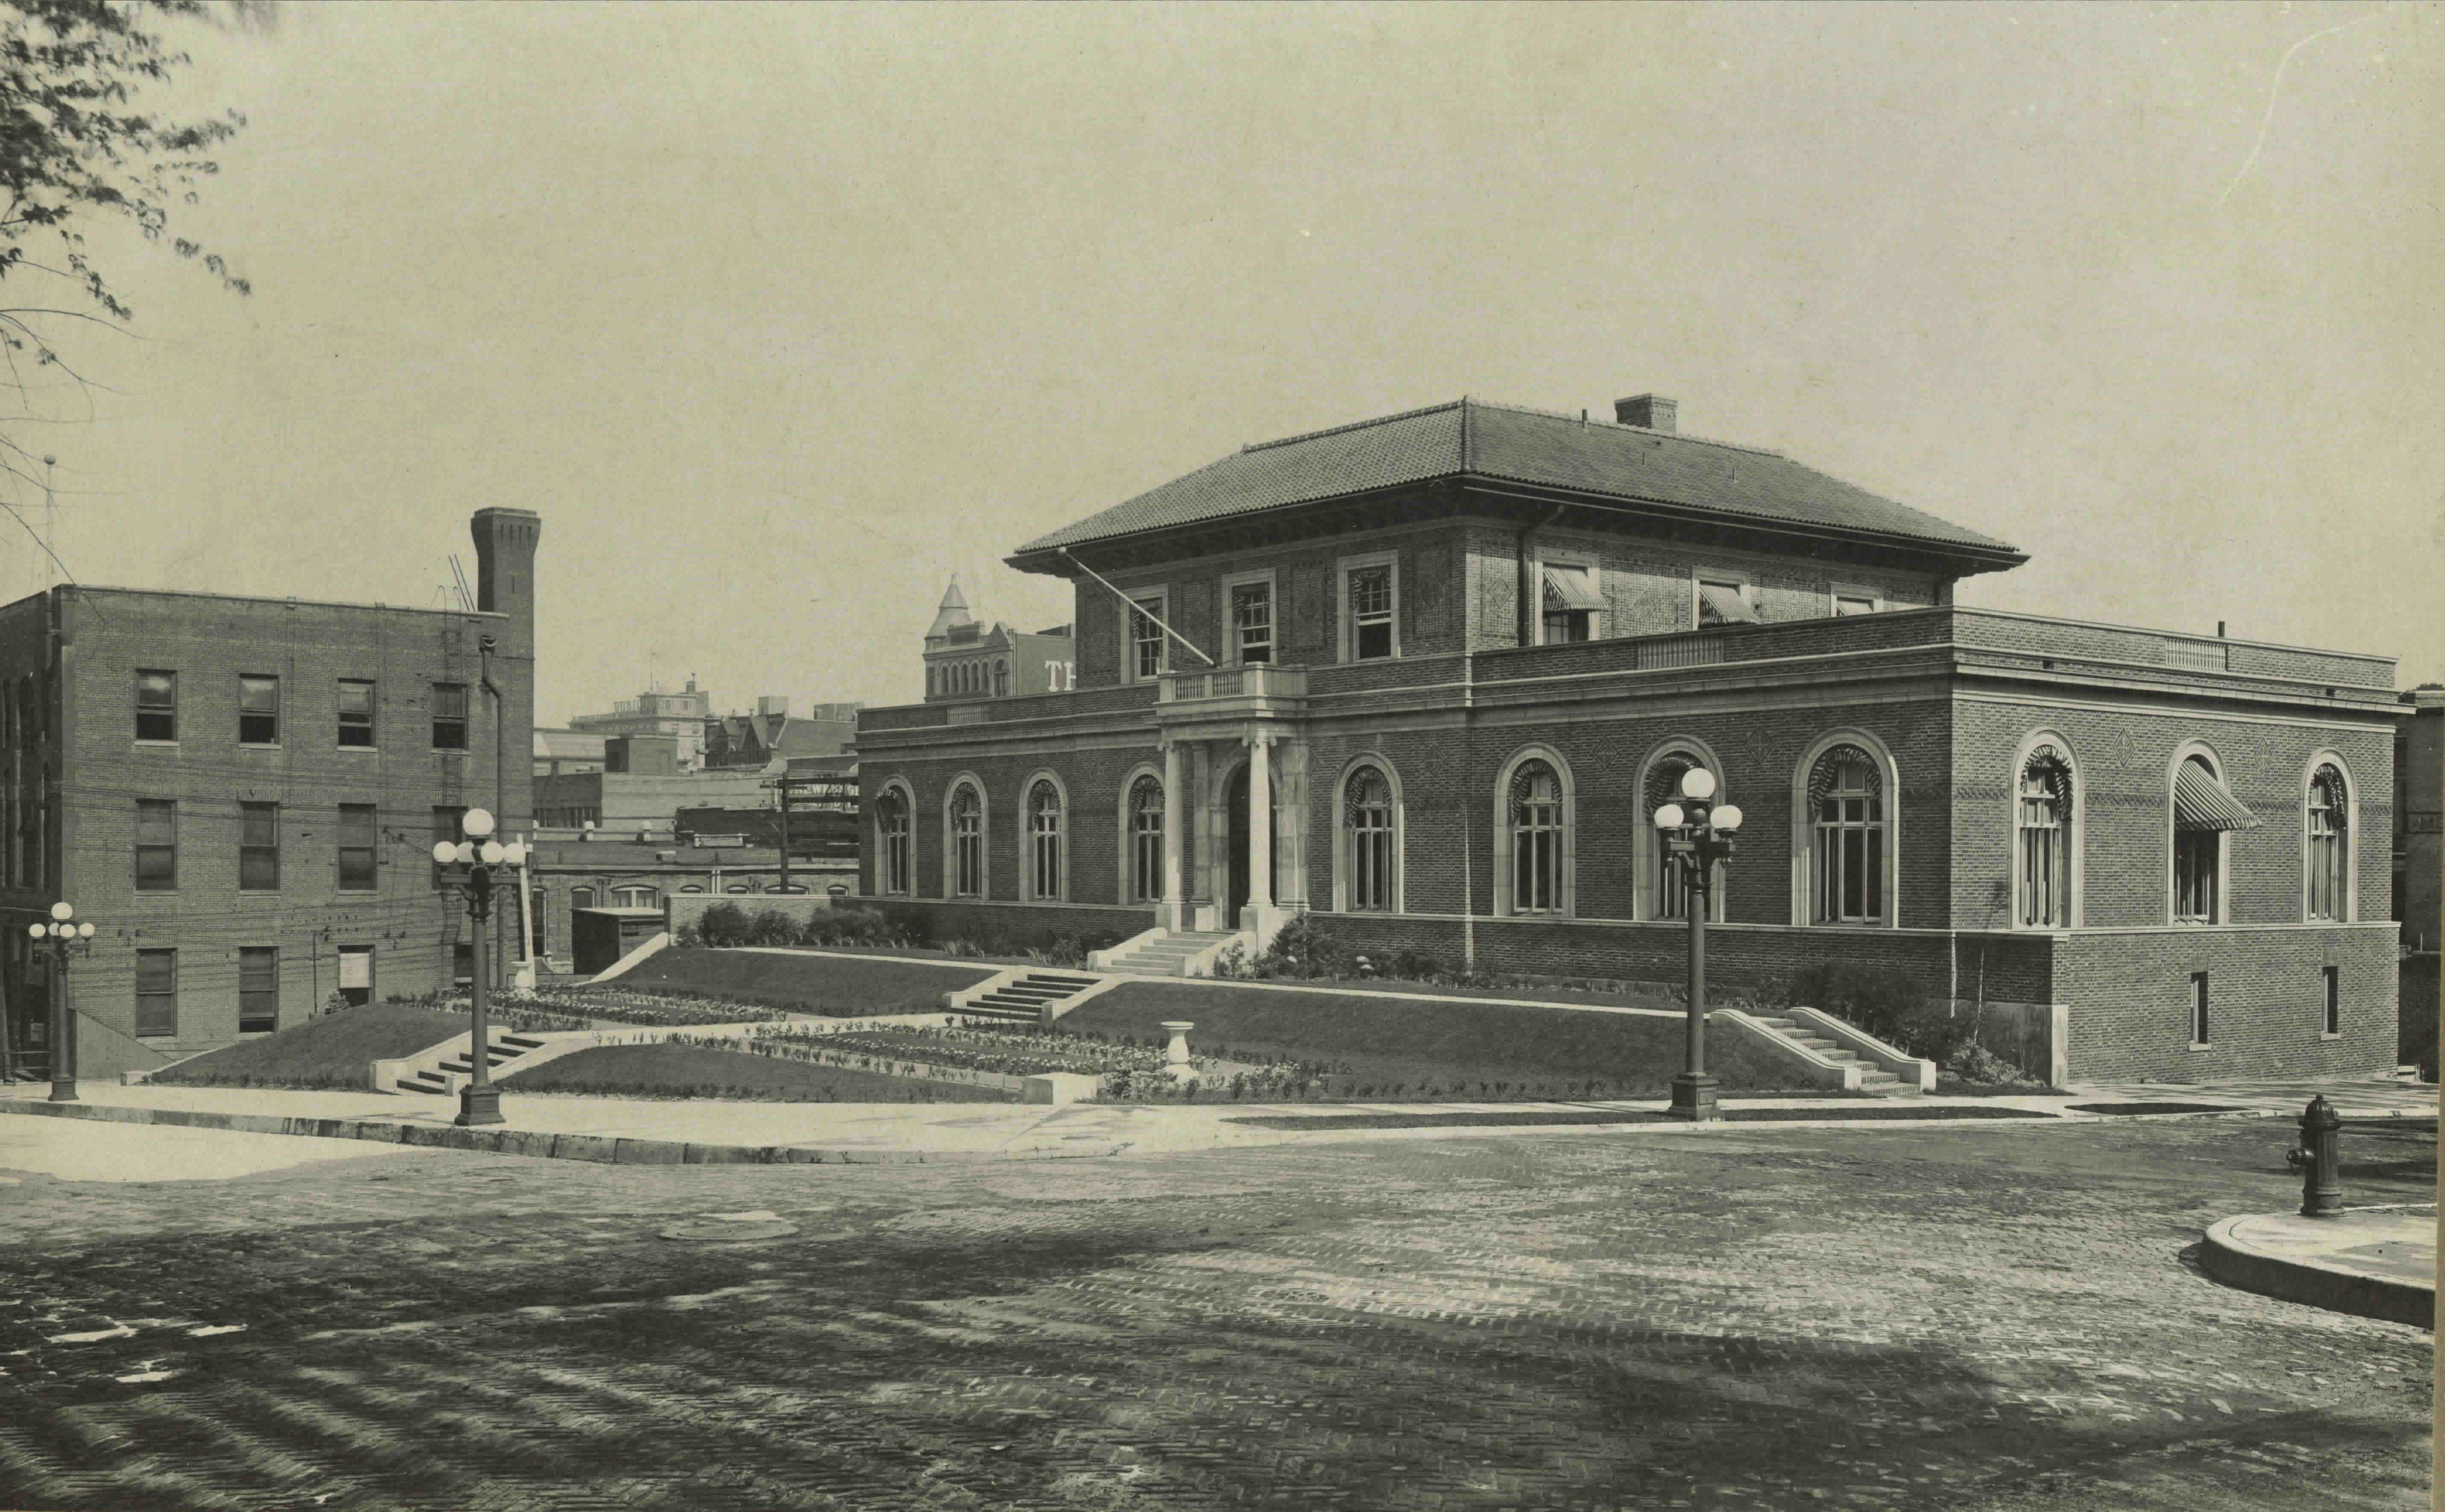 St. Joseph News-Press Building c. 1950.

Image provided by the St. Joseph Museums, Inc.